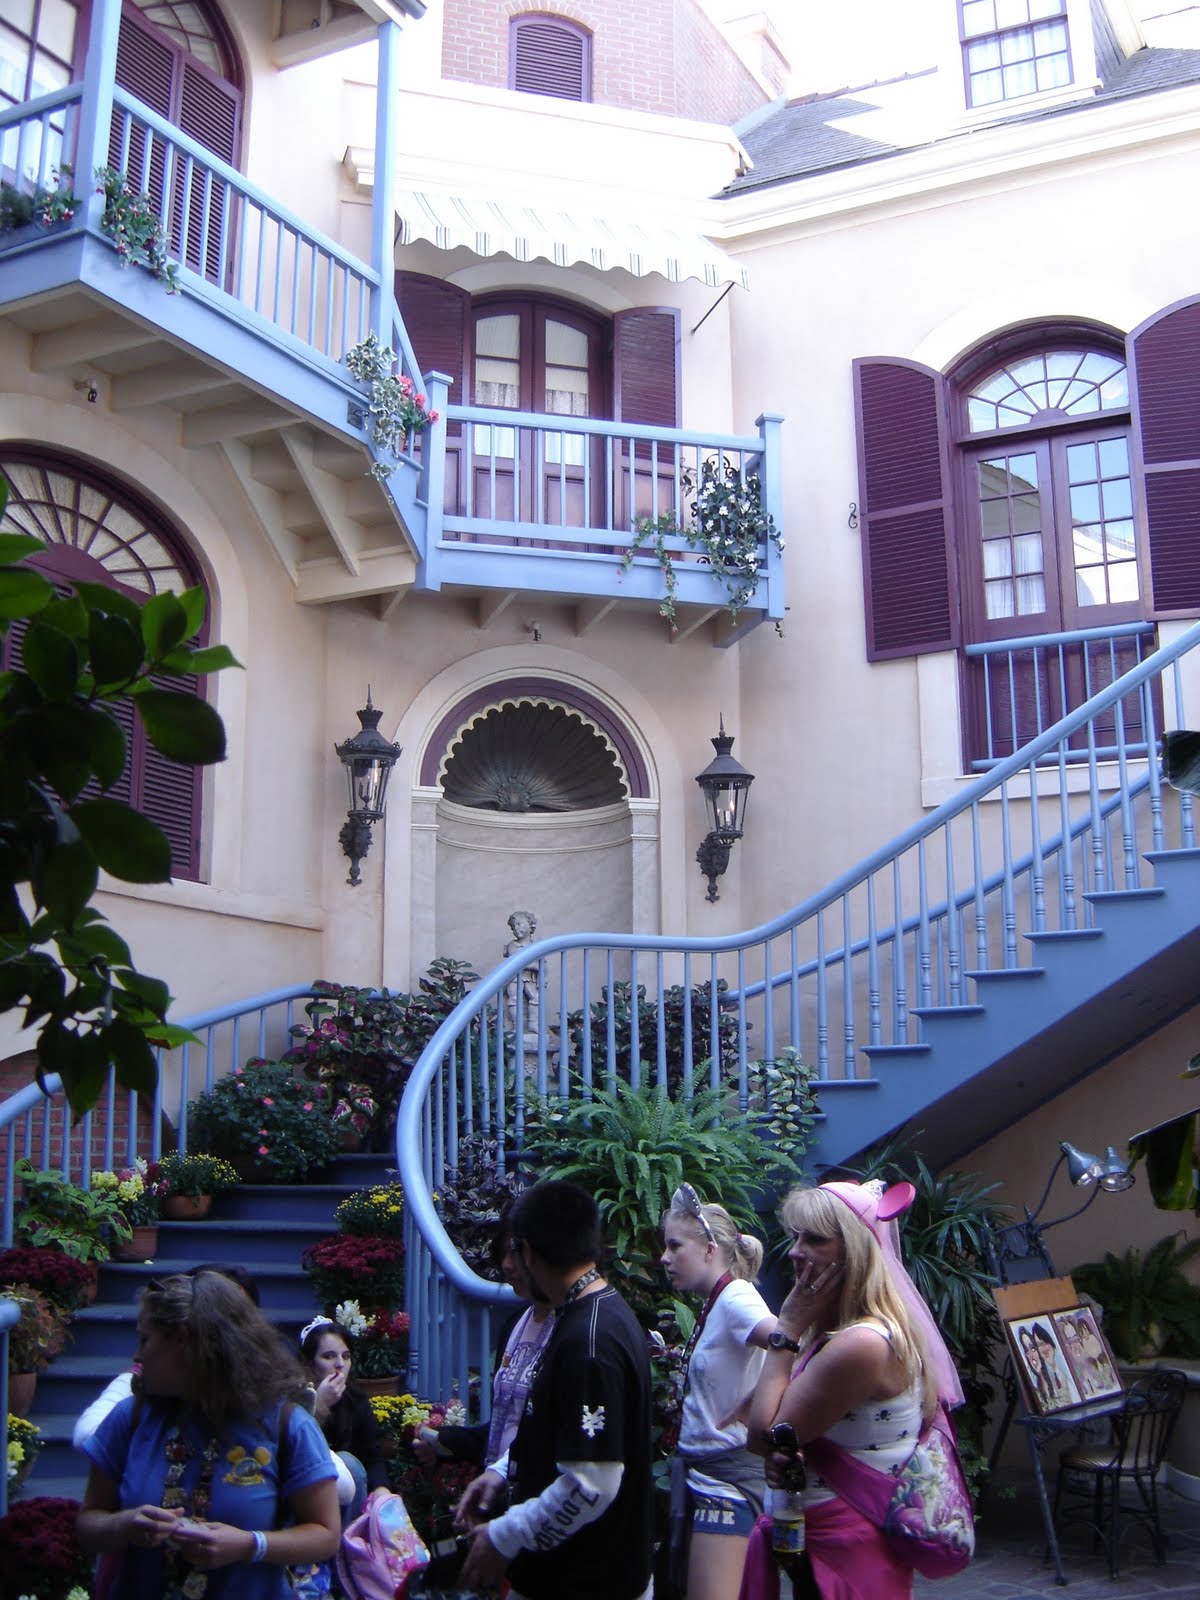 Disney Vacation Kingdom: Disneyland Monday - New Orleans Square